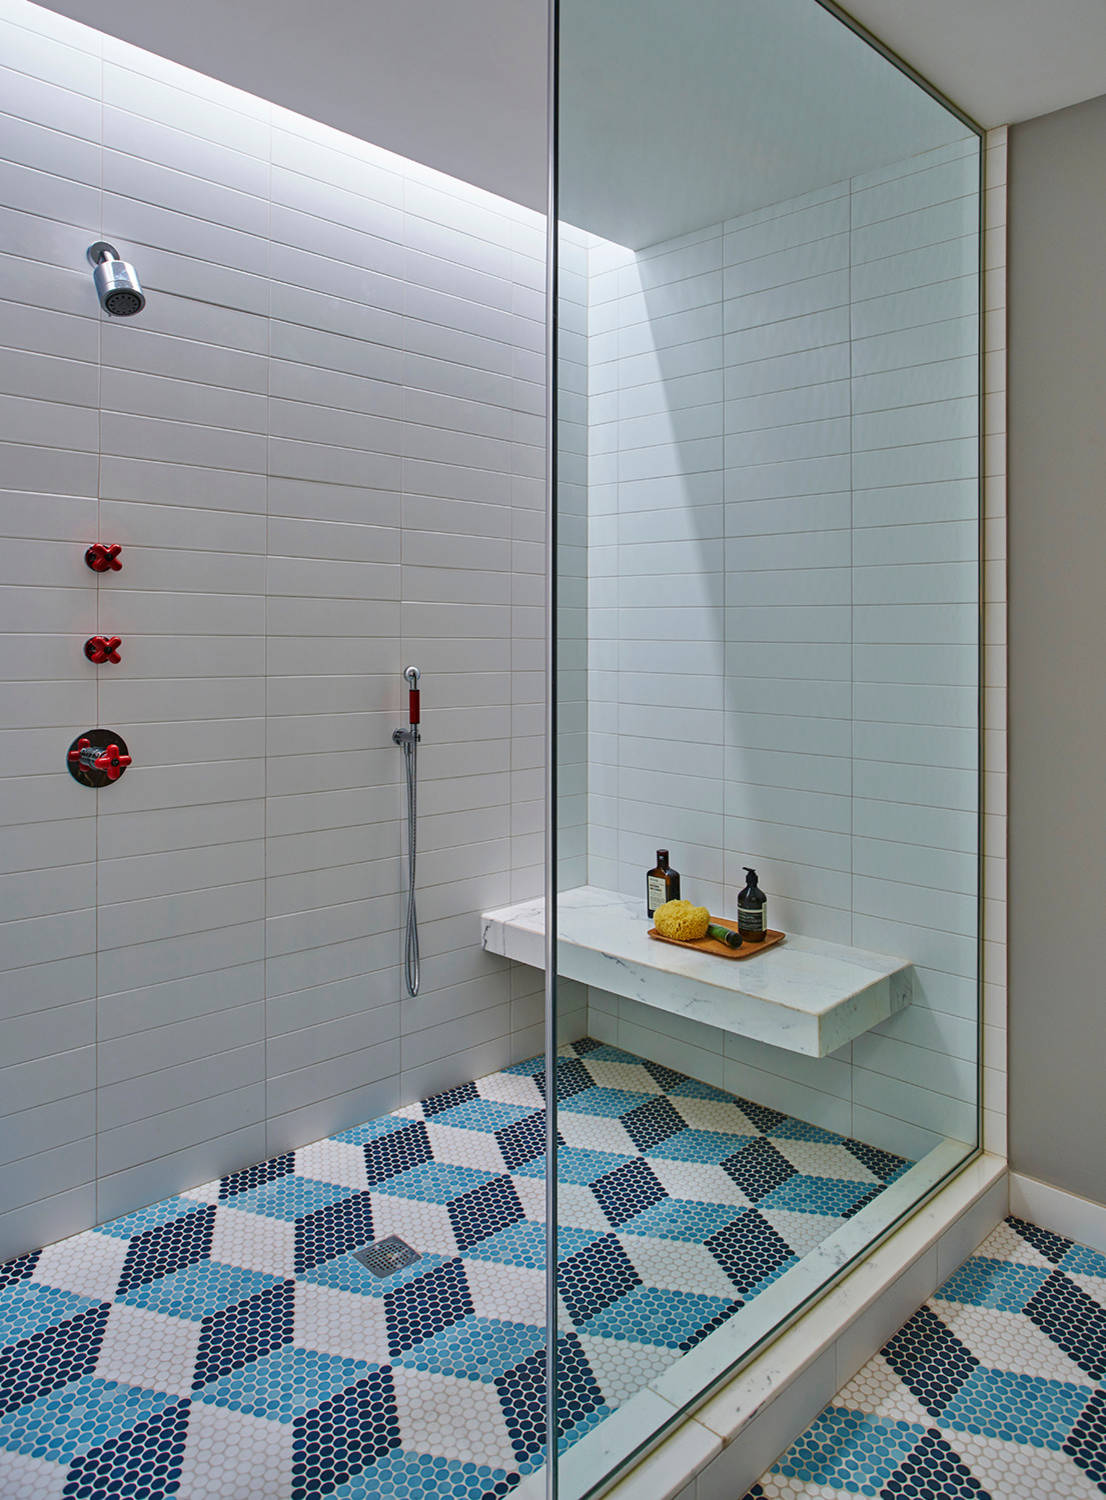 75 Beautiful Mosaic Tile Floor Bathroom, Bathroom Mosaic Tile Ideas